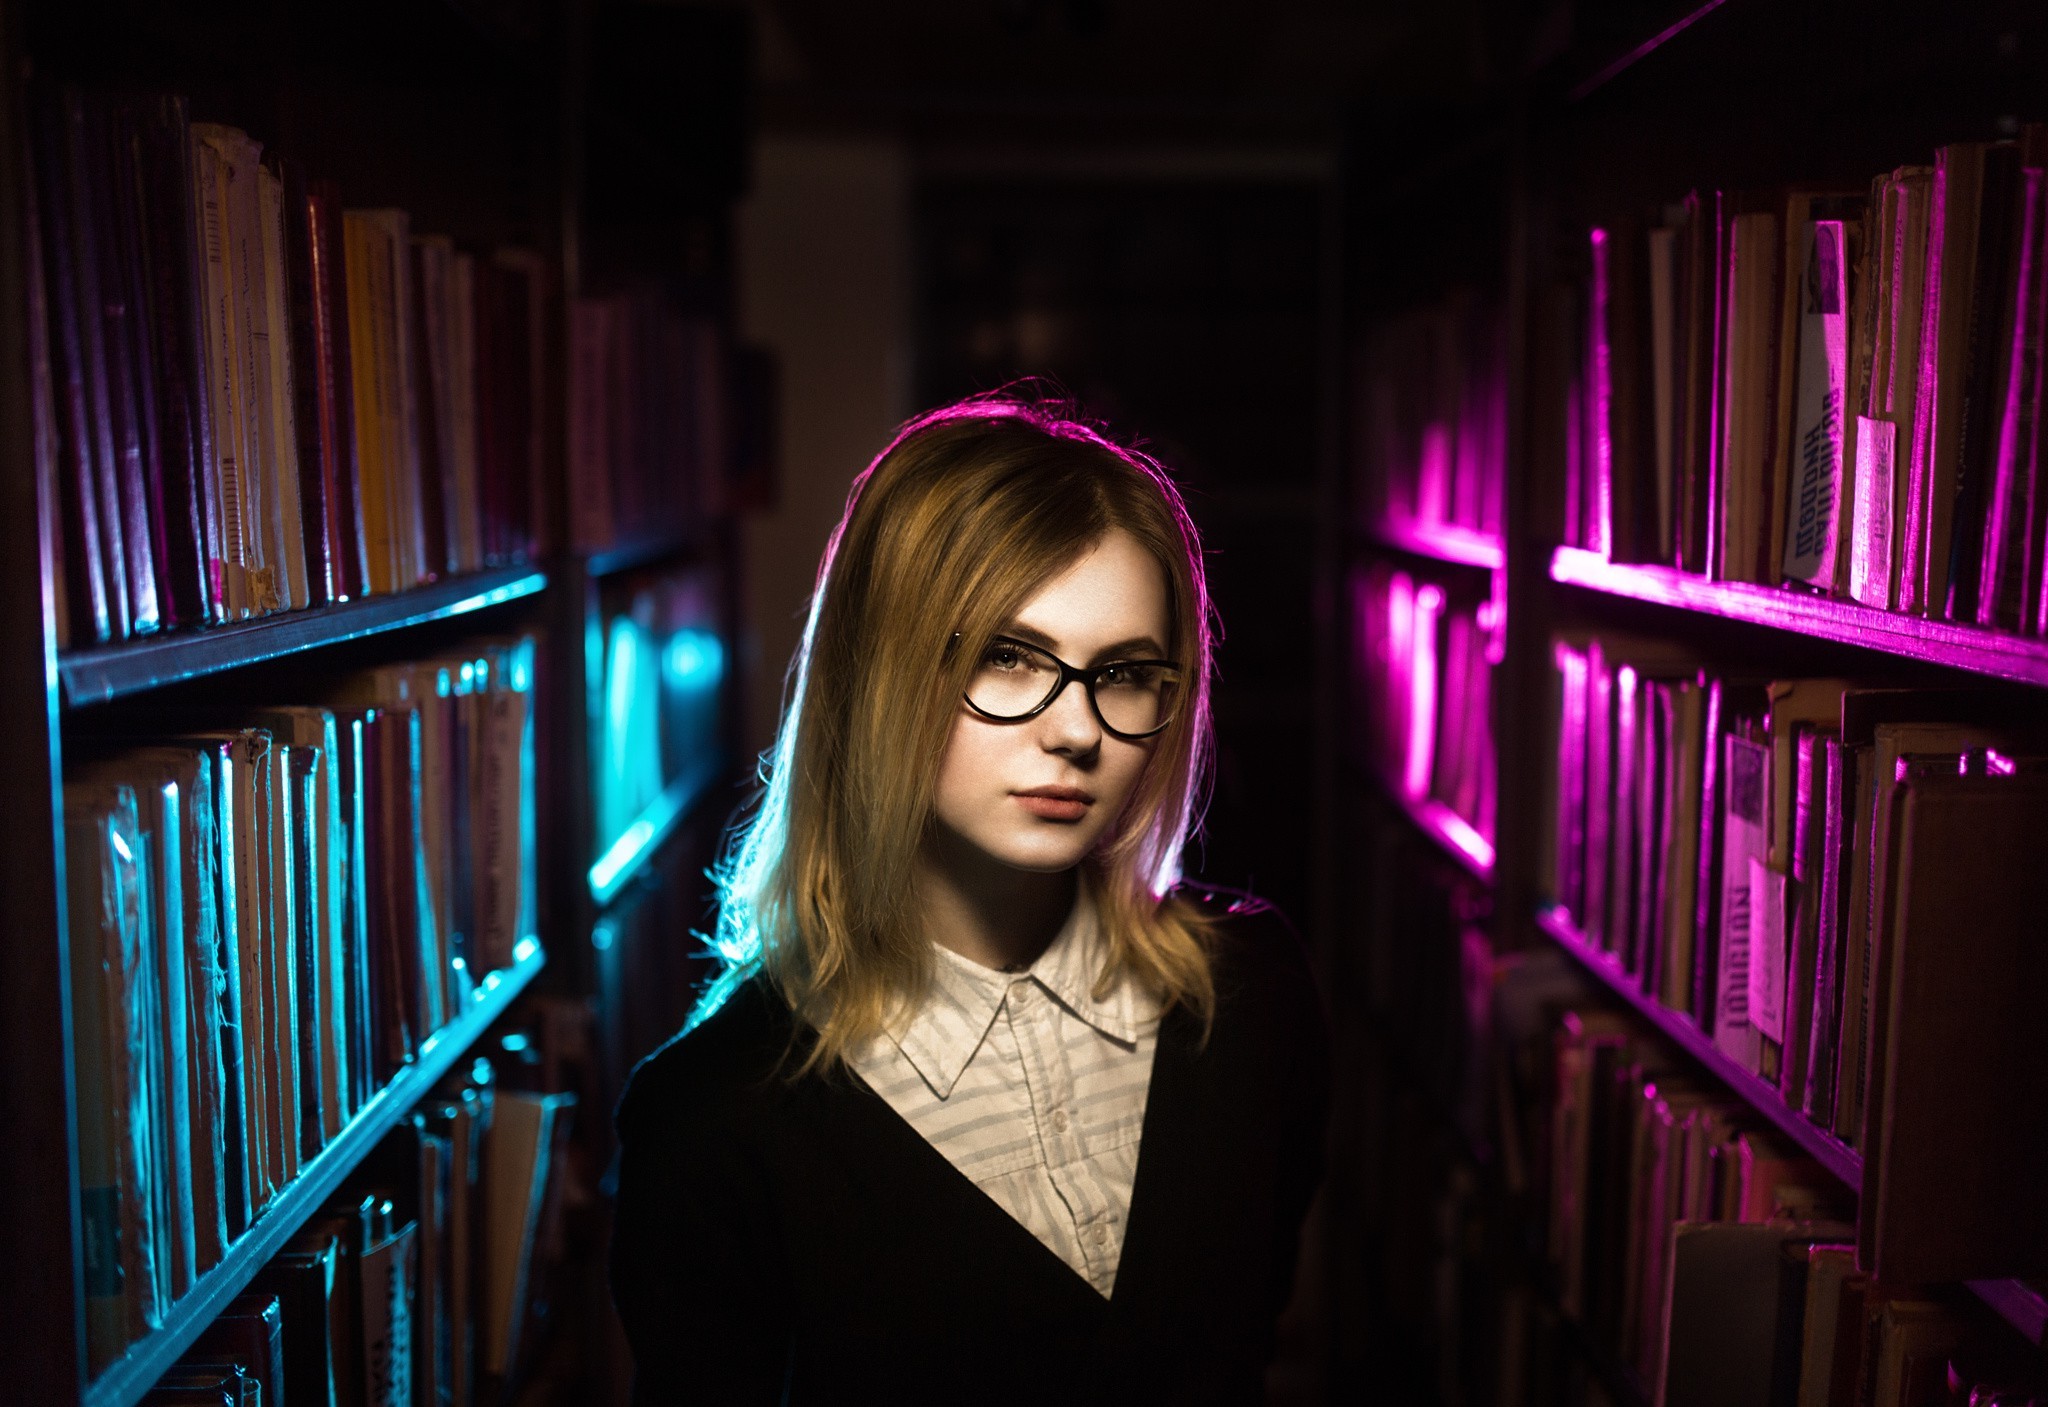 Wallpapers glasses library women on the desktop